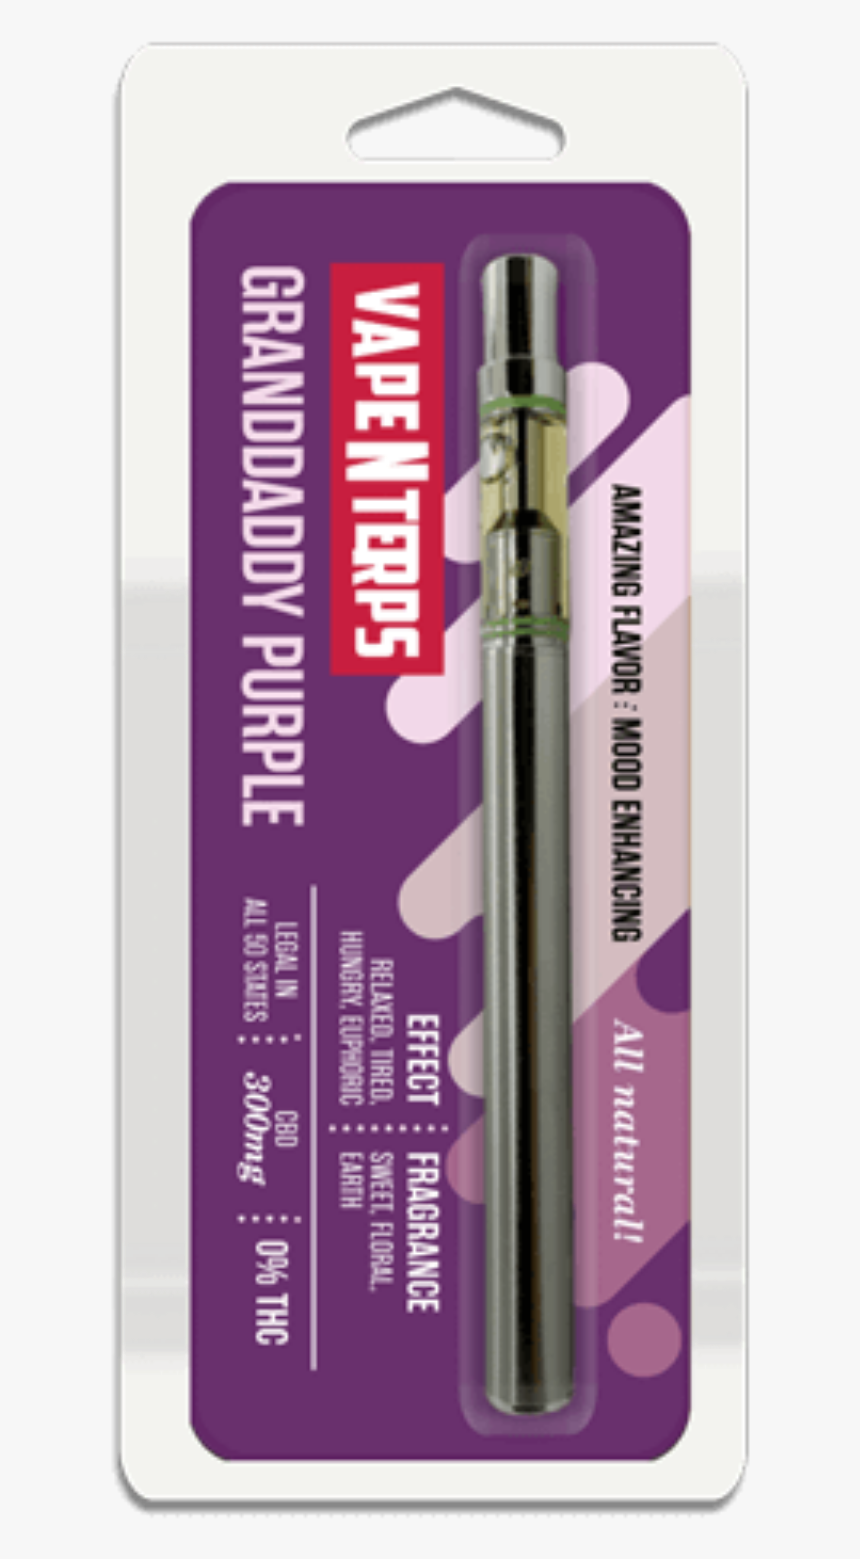 Transparent Vape Pen Png - Gorilla Vape Pen 2019, Png Download, Free Download